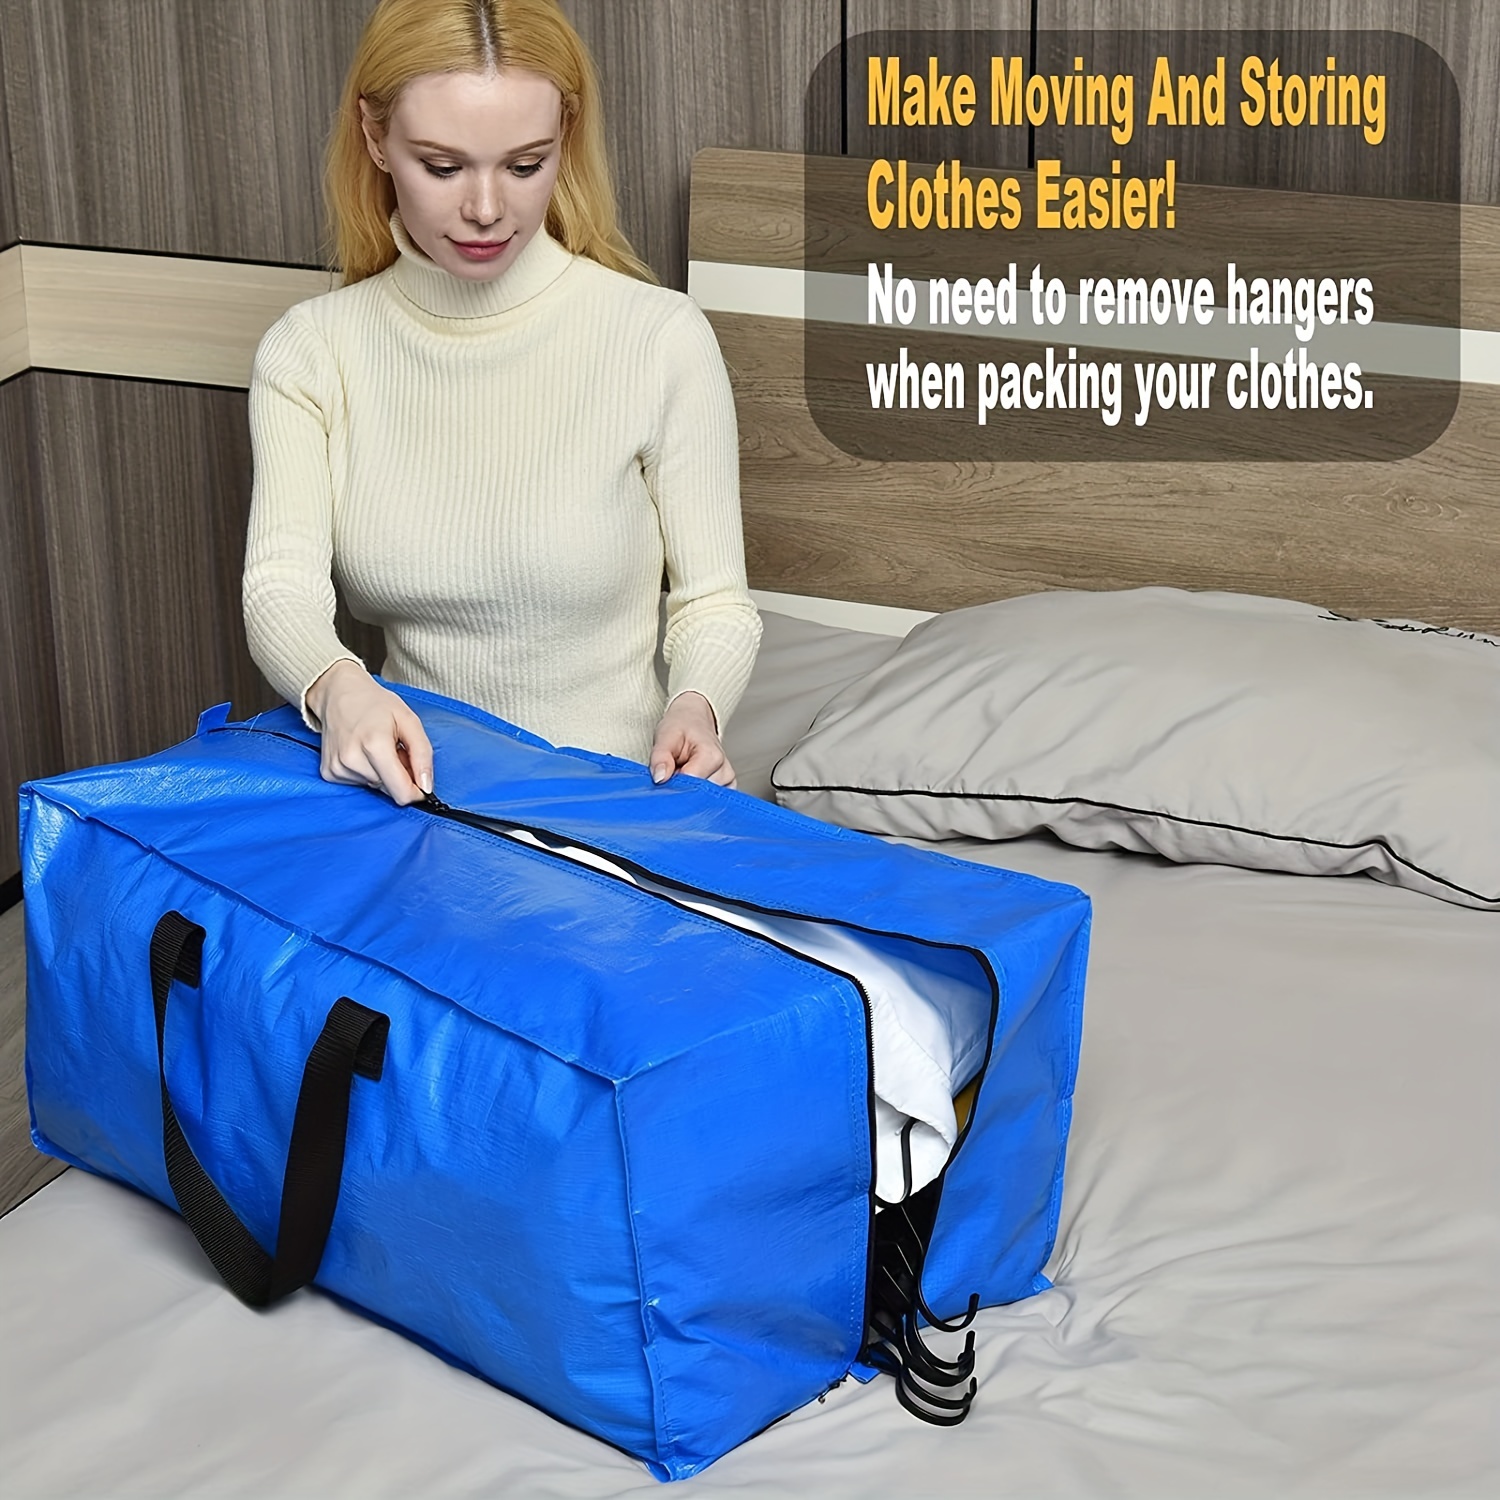 2 IKEA Shopping Bag New Large Reusable - Laundry Tote Grocery Storage - Frakta